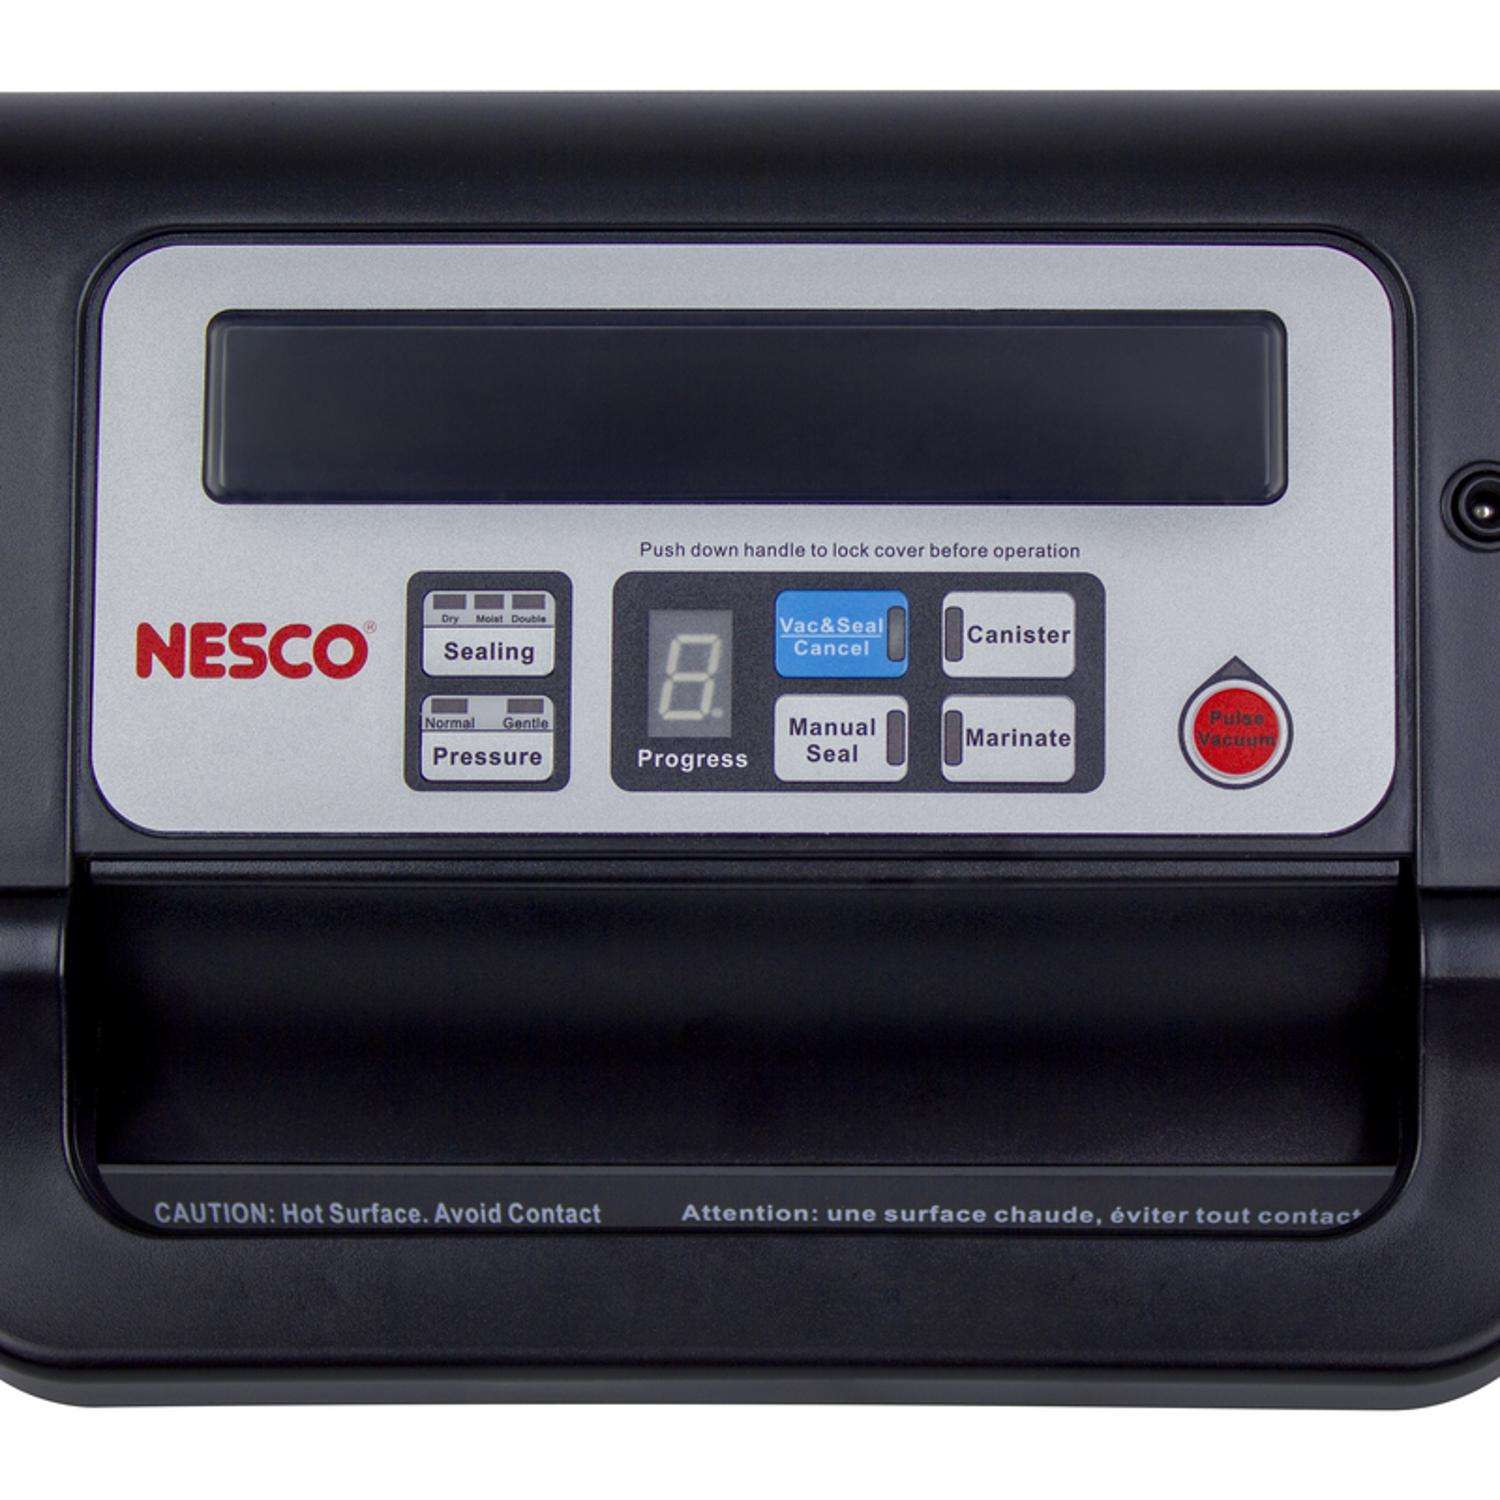 The NESCO VS-02 Deluxe Vacuum Sealer Open Box